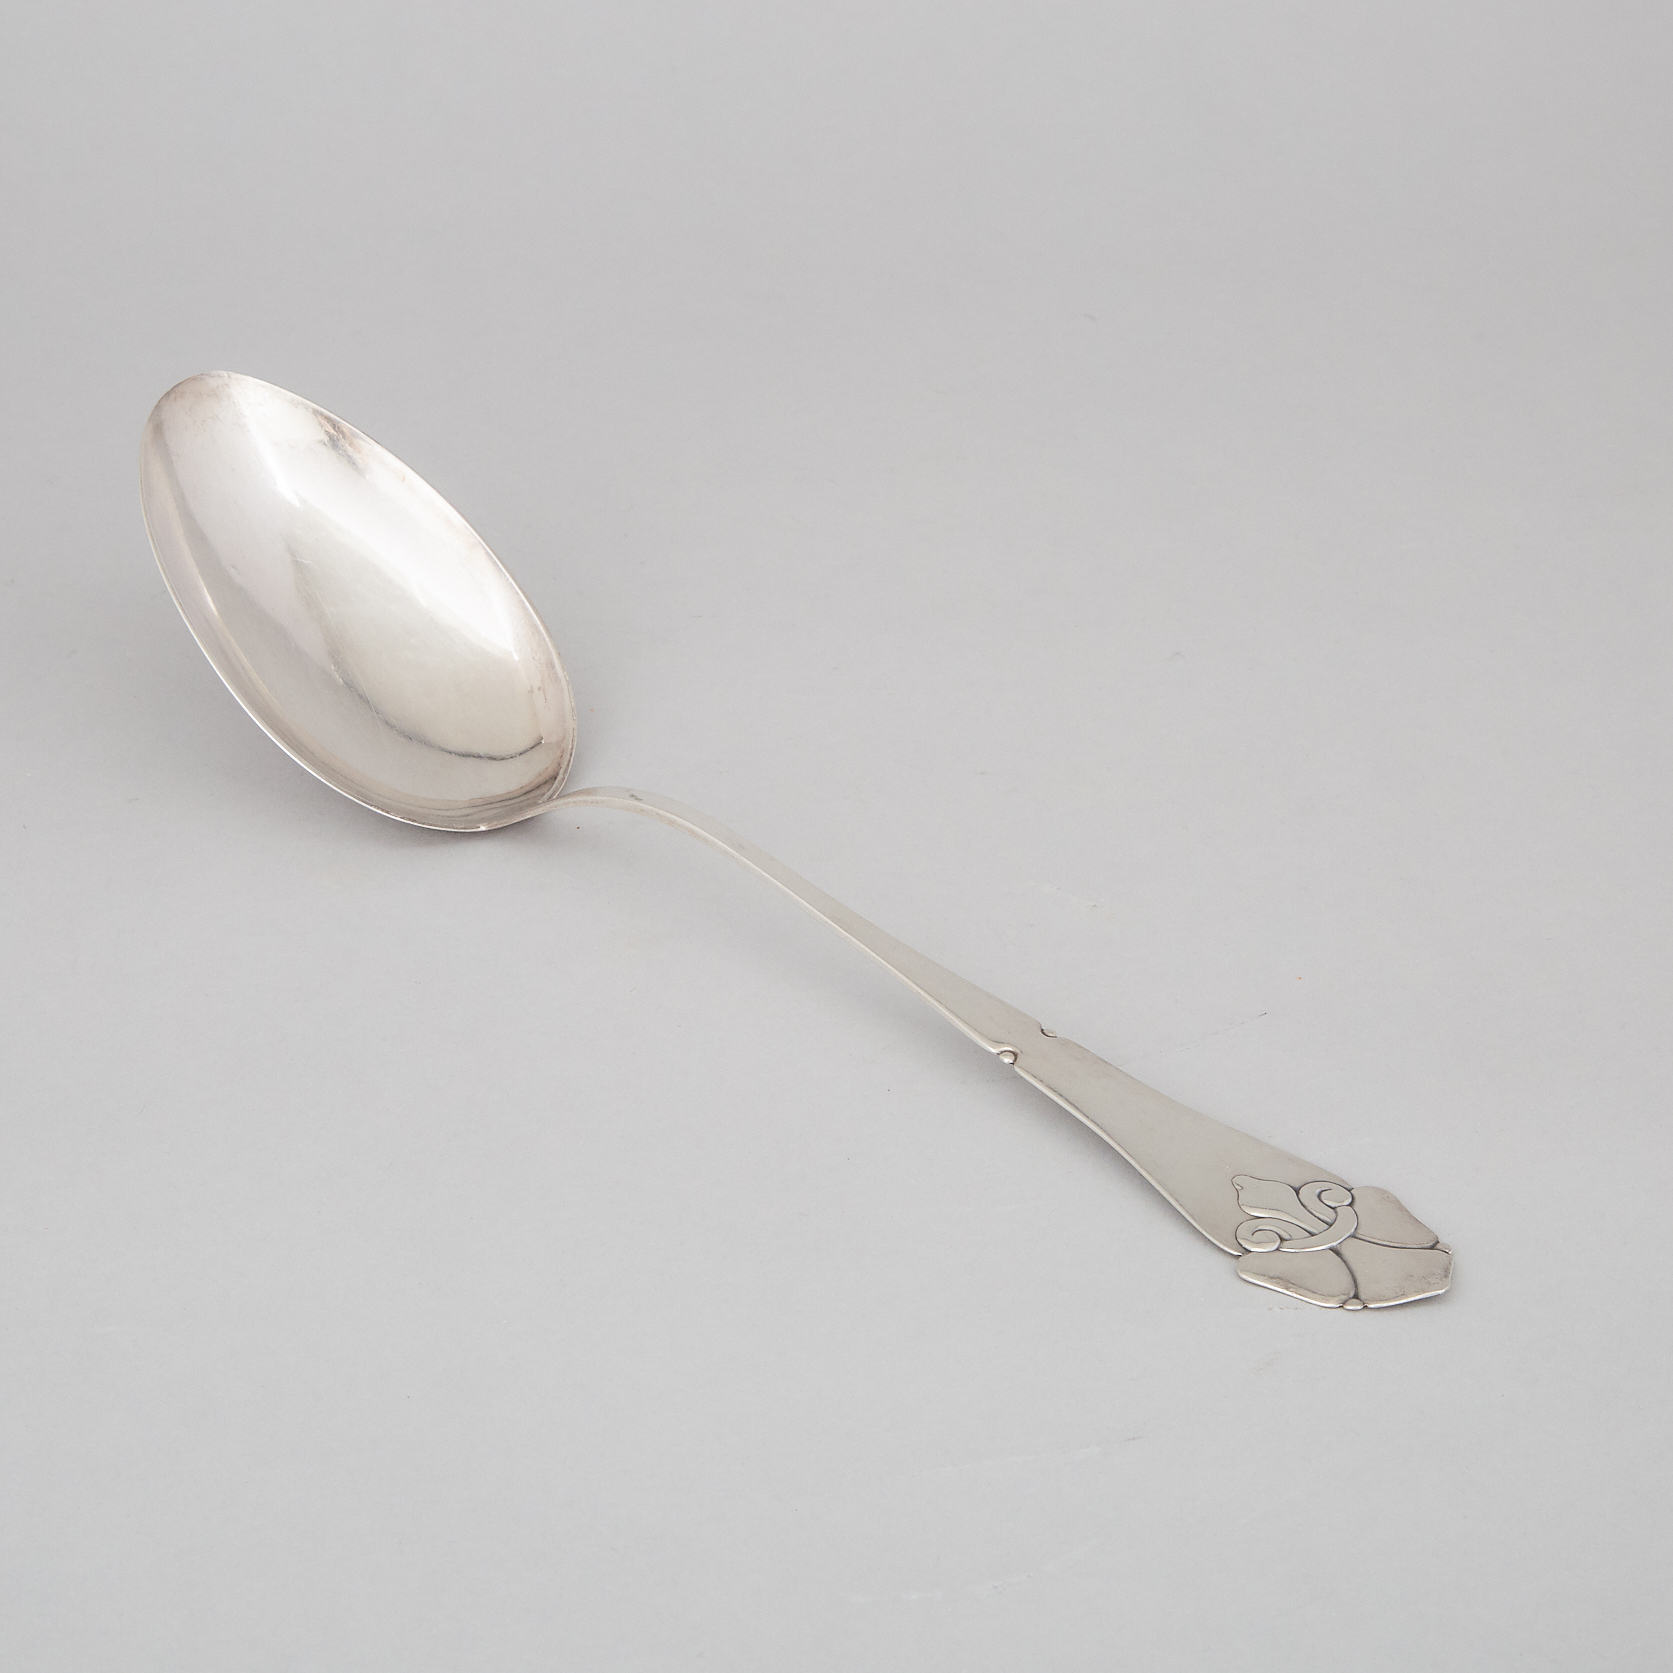 Danish Silver Serving Spoon, Carl M. Cohr, Fredericia, 1925